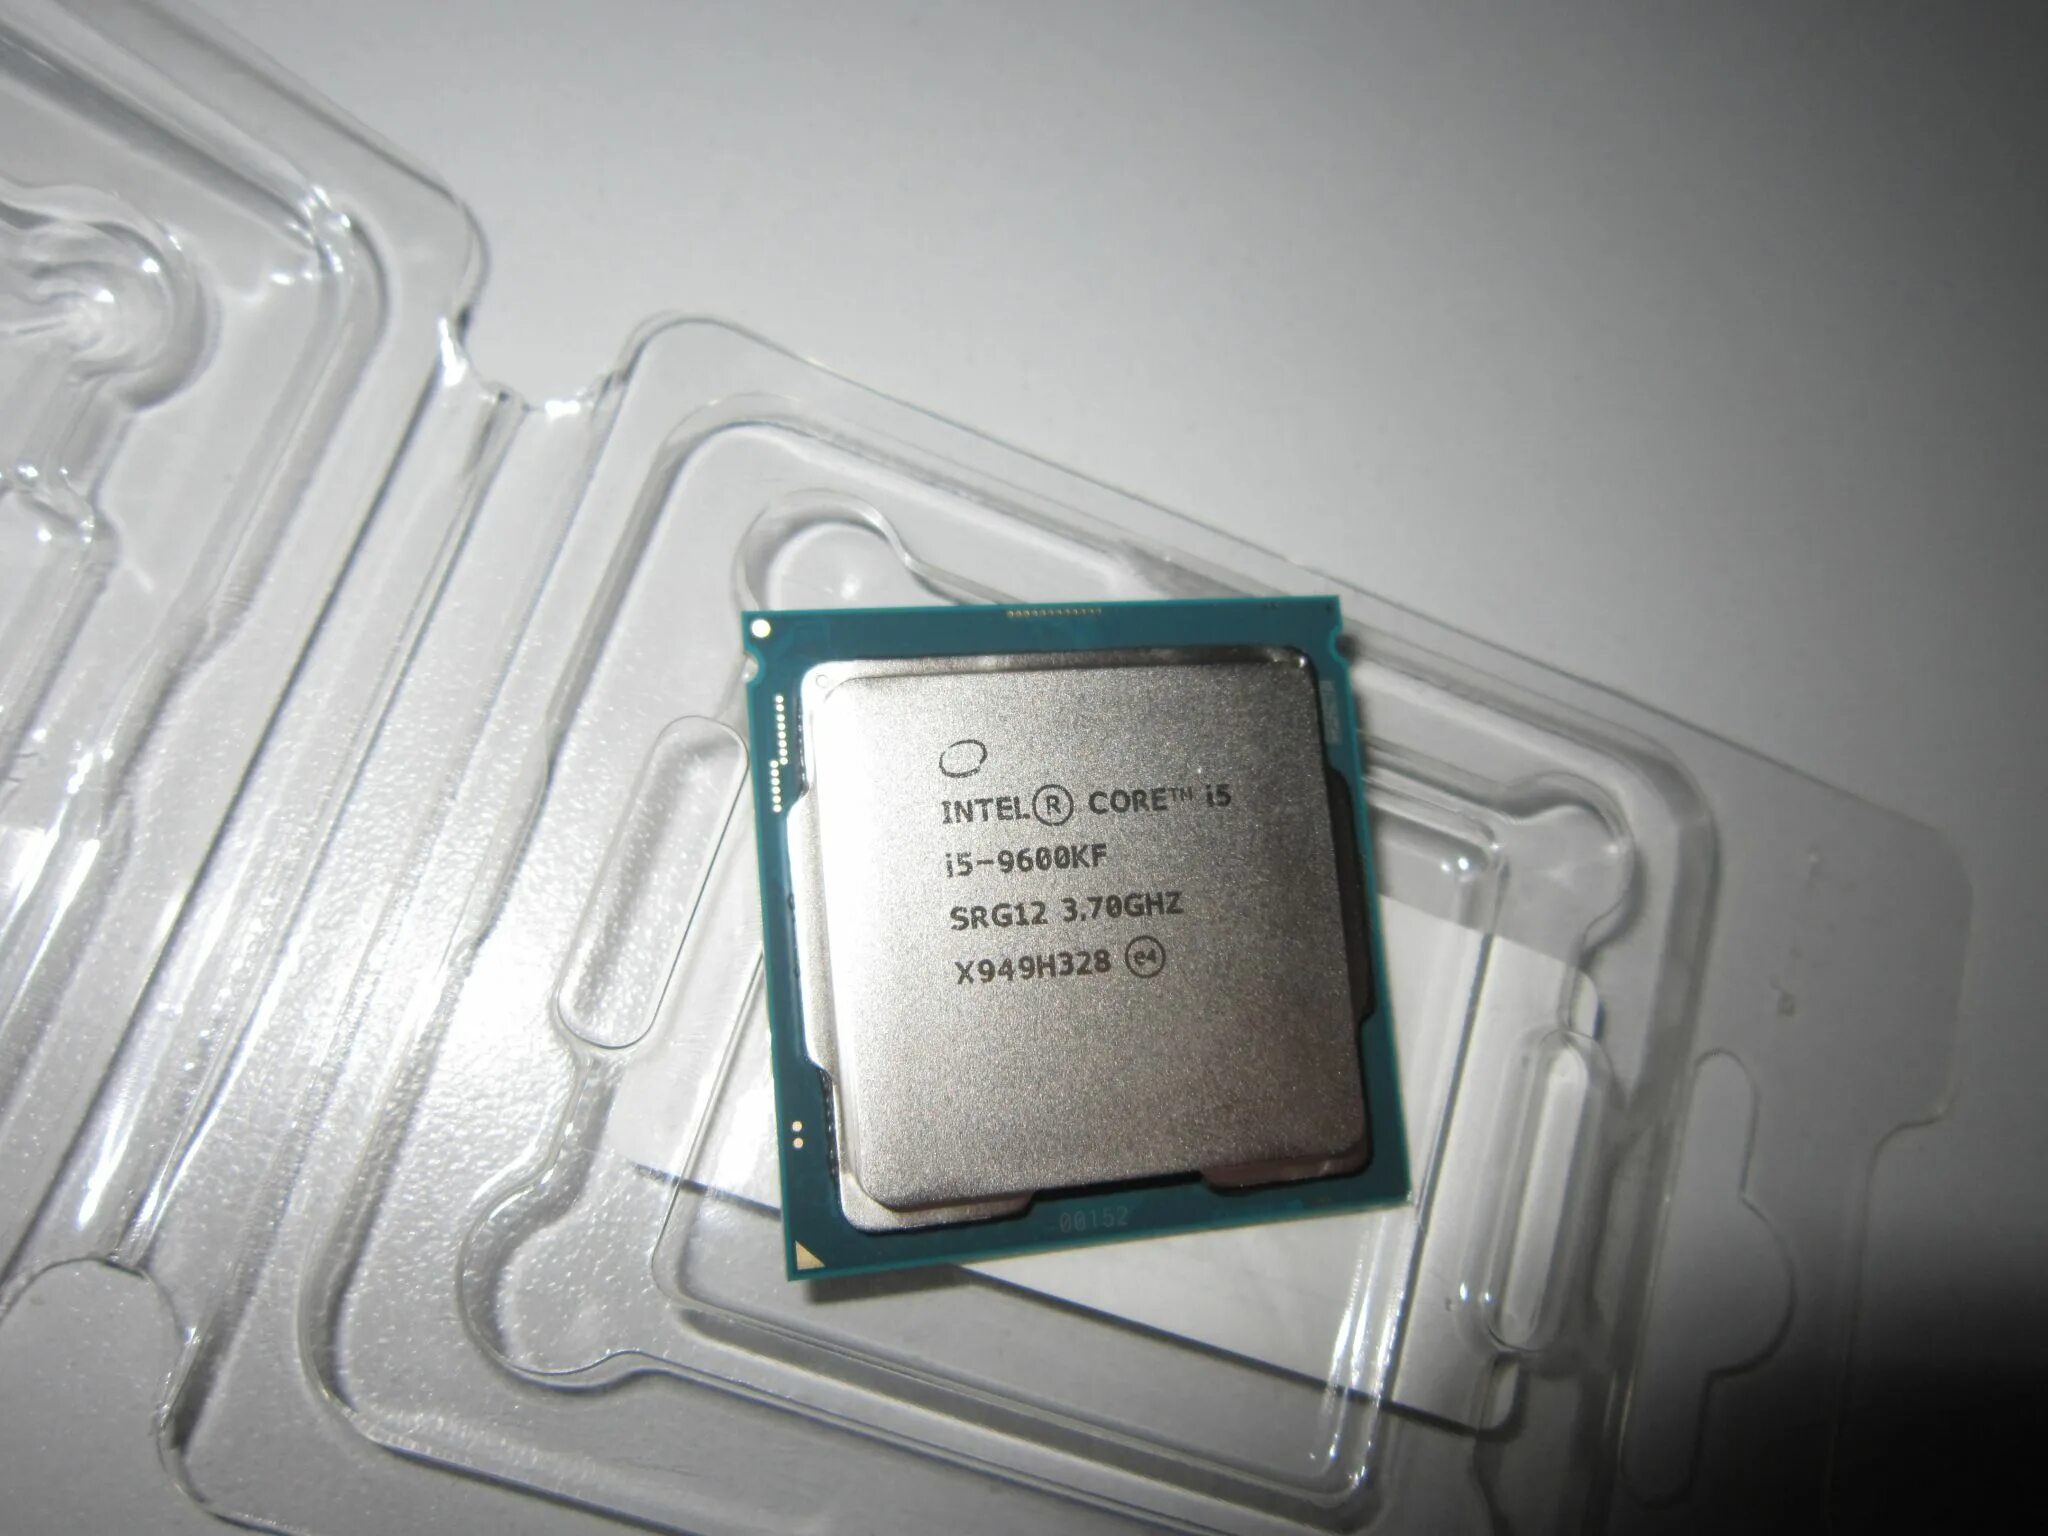 12600kf характеристики. Процессор Intel Core i5-9600kf OEM. Процессор Intel Core i5-10600kf OEM. Core i5 9600kf. Процессор Intel Core i5 12600kf.